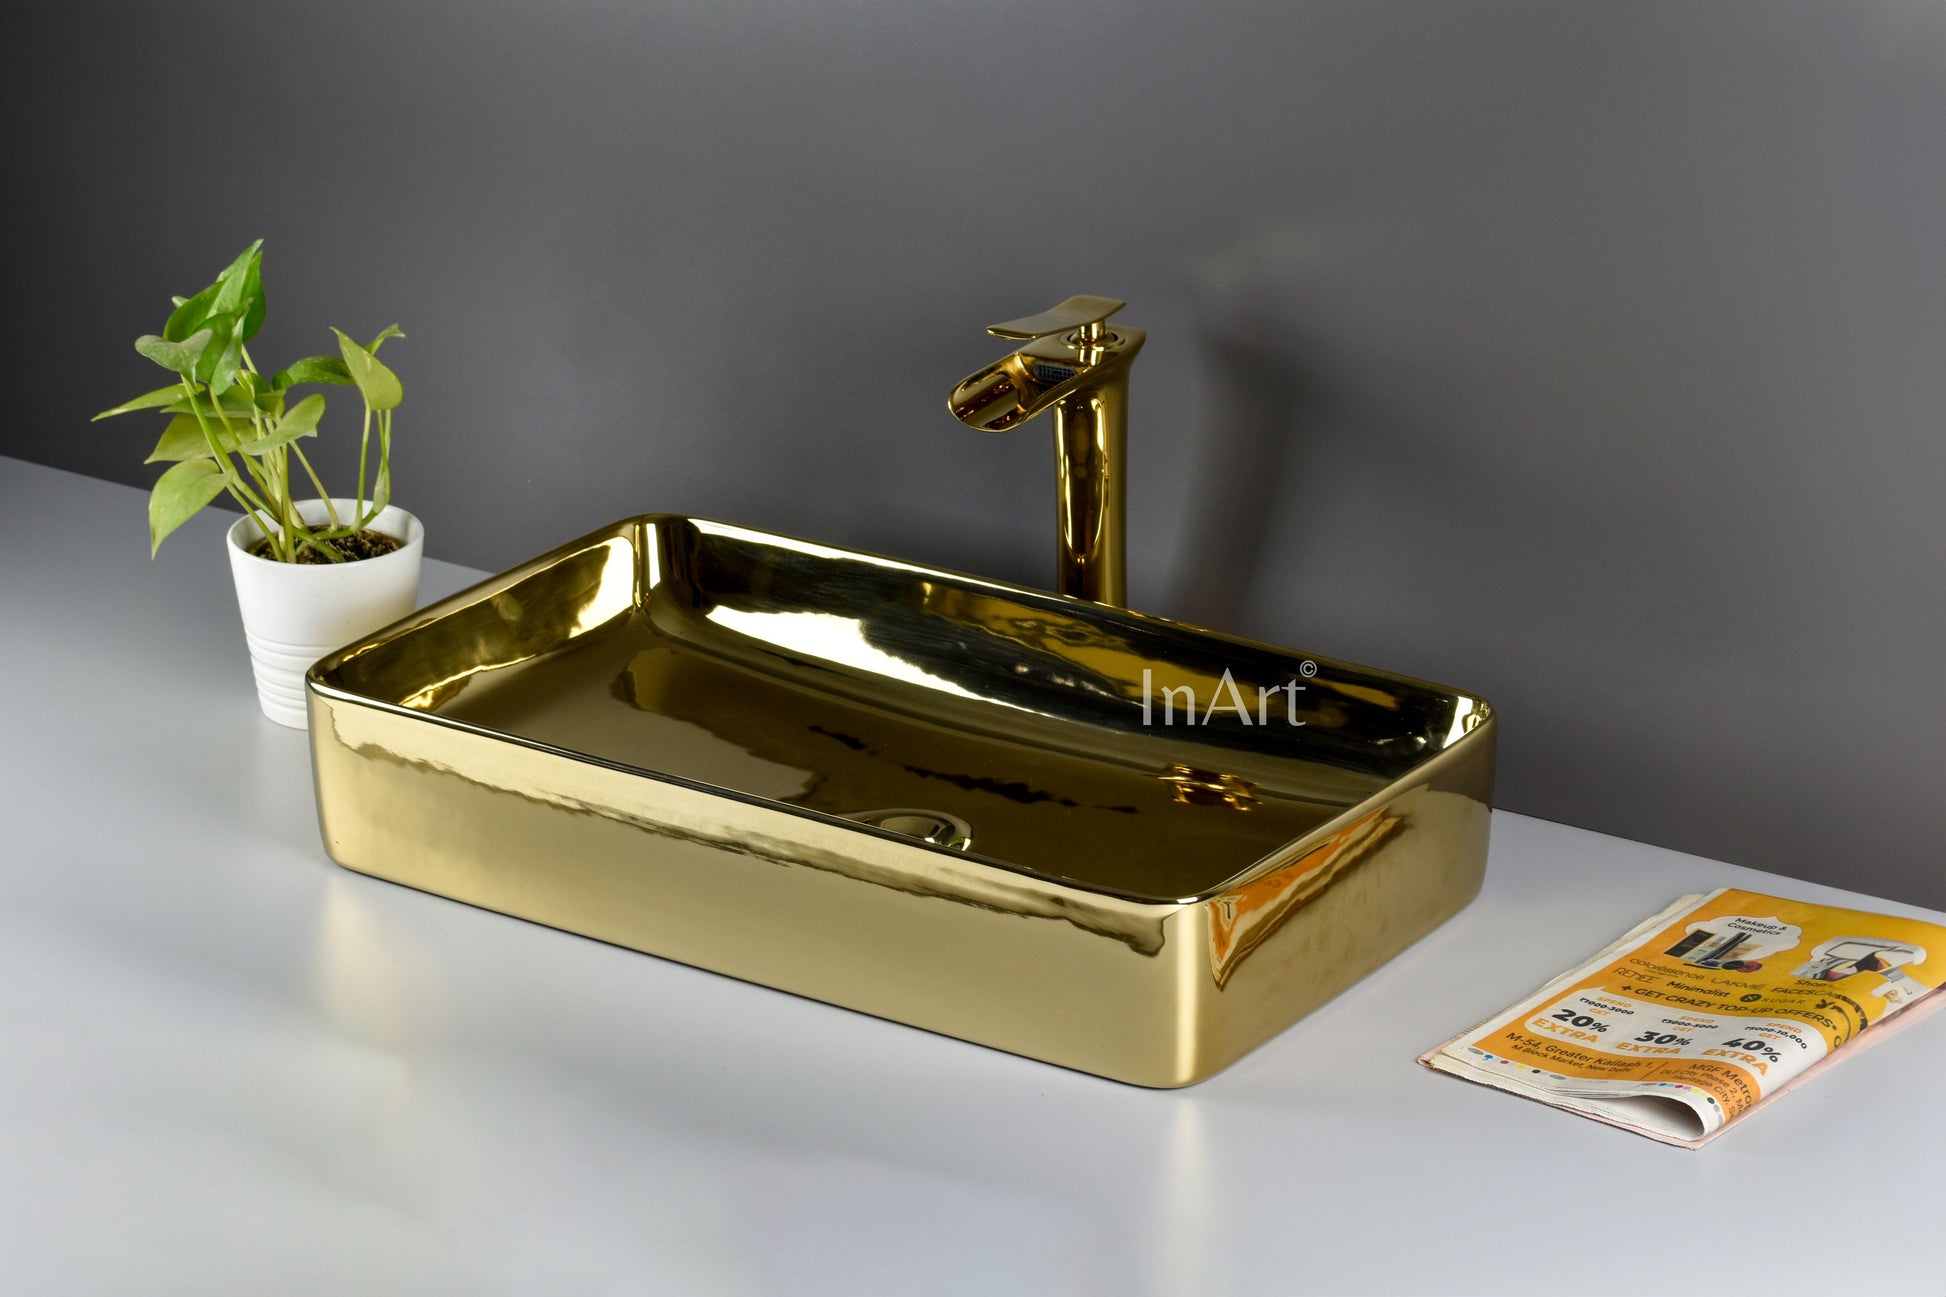 InArt Wash Basin Designer Counter Top Bathroom Sink - Vanity Wash Basin for Bathroom, Table Top Wash Basin 62 x 35 x 12 cm Gold DW273 - InArt-Studio